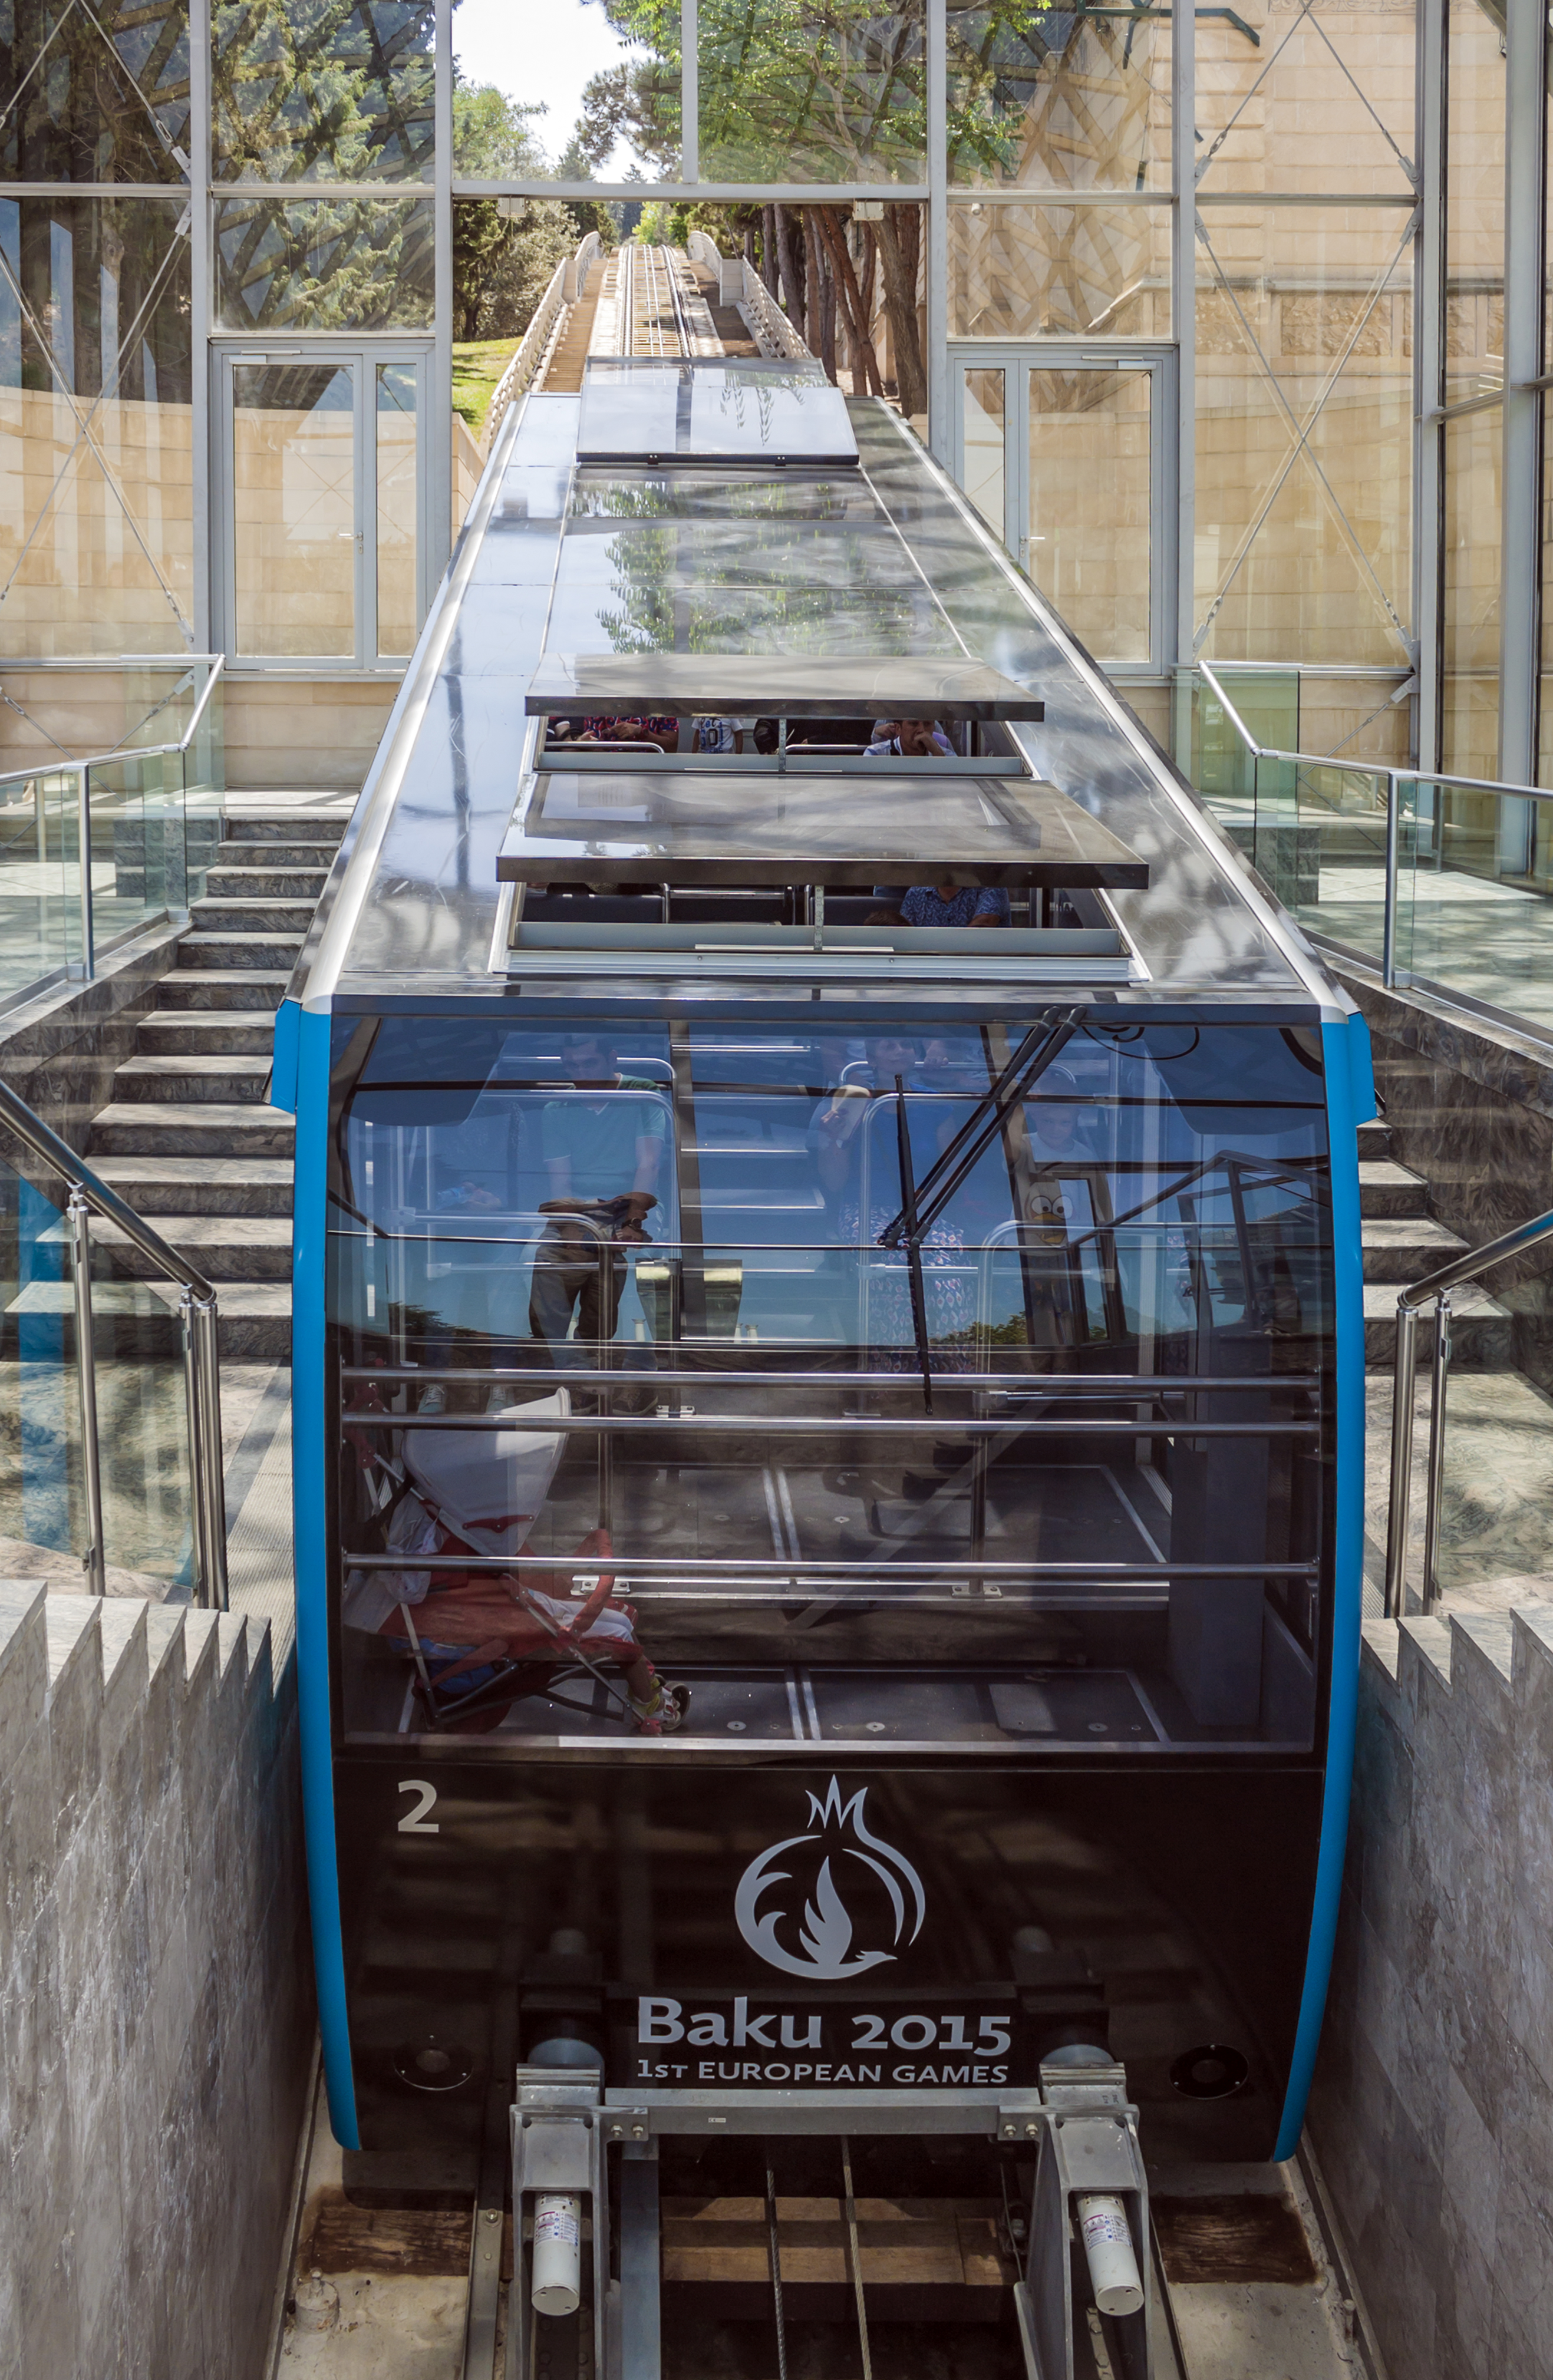 The car of the Baku funicular station